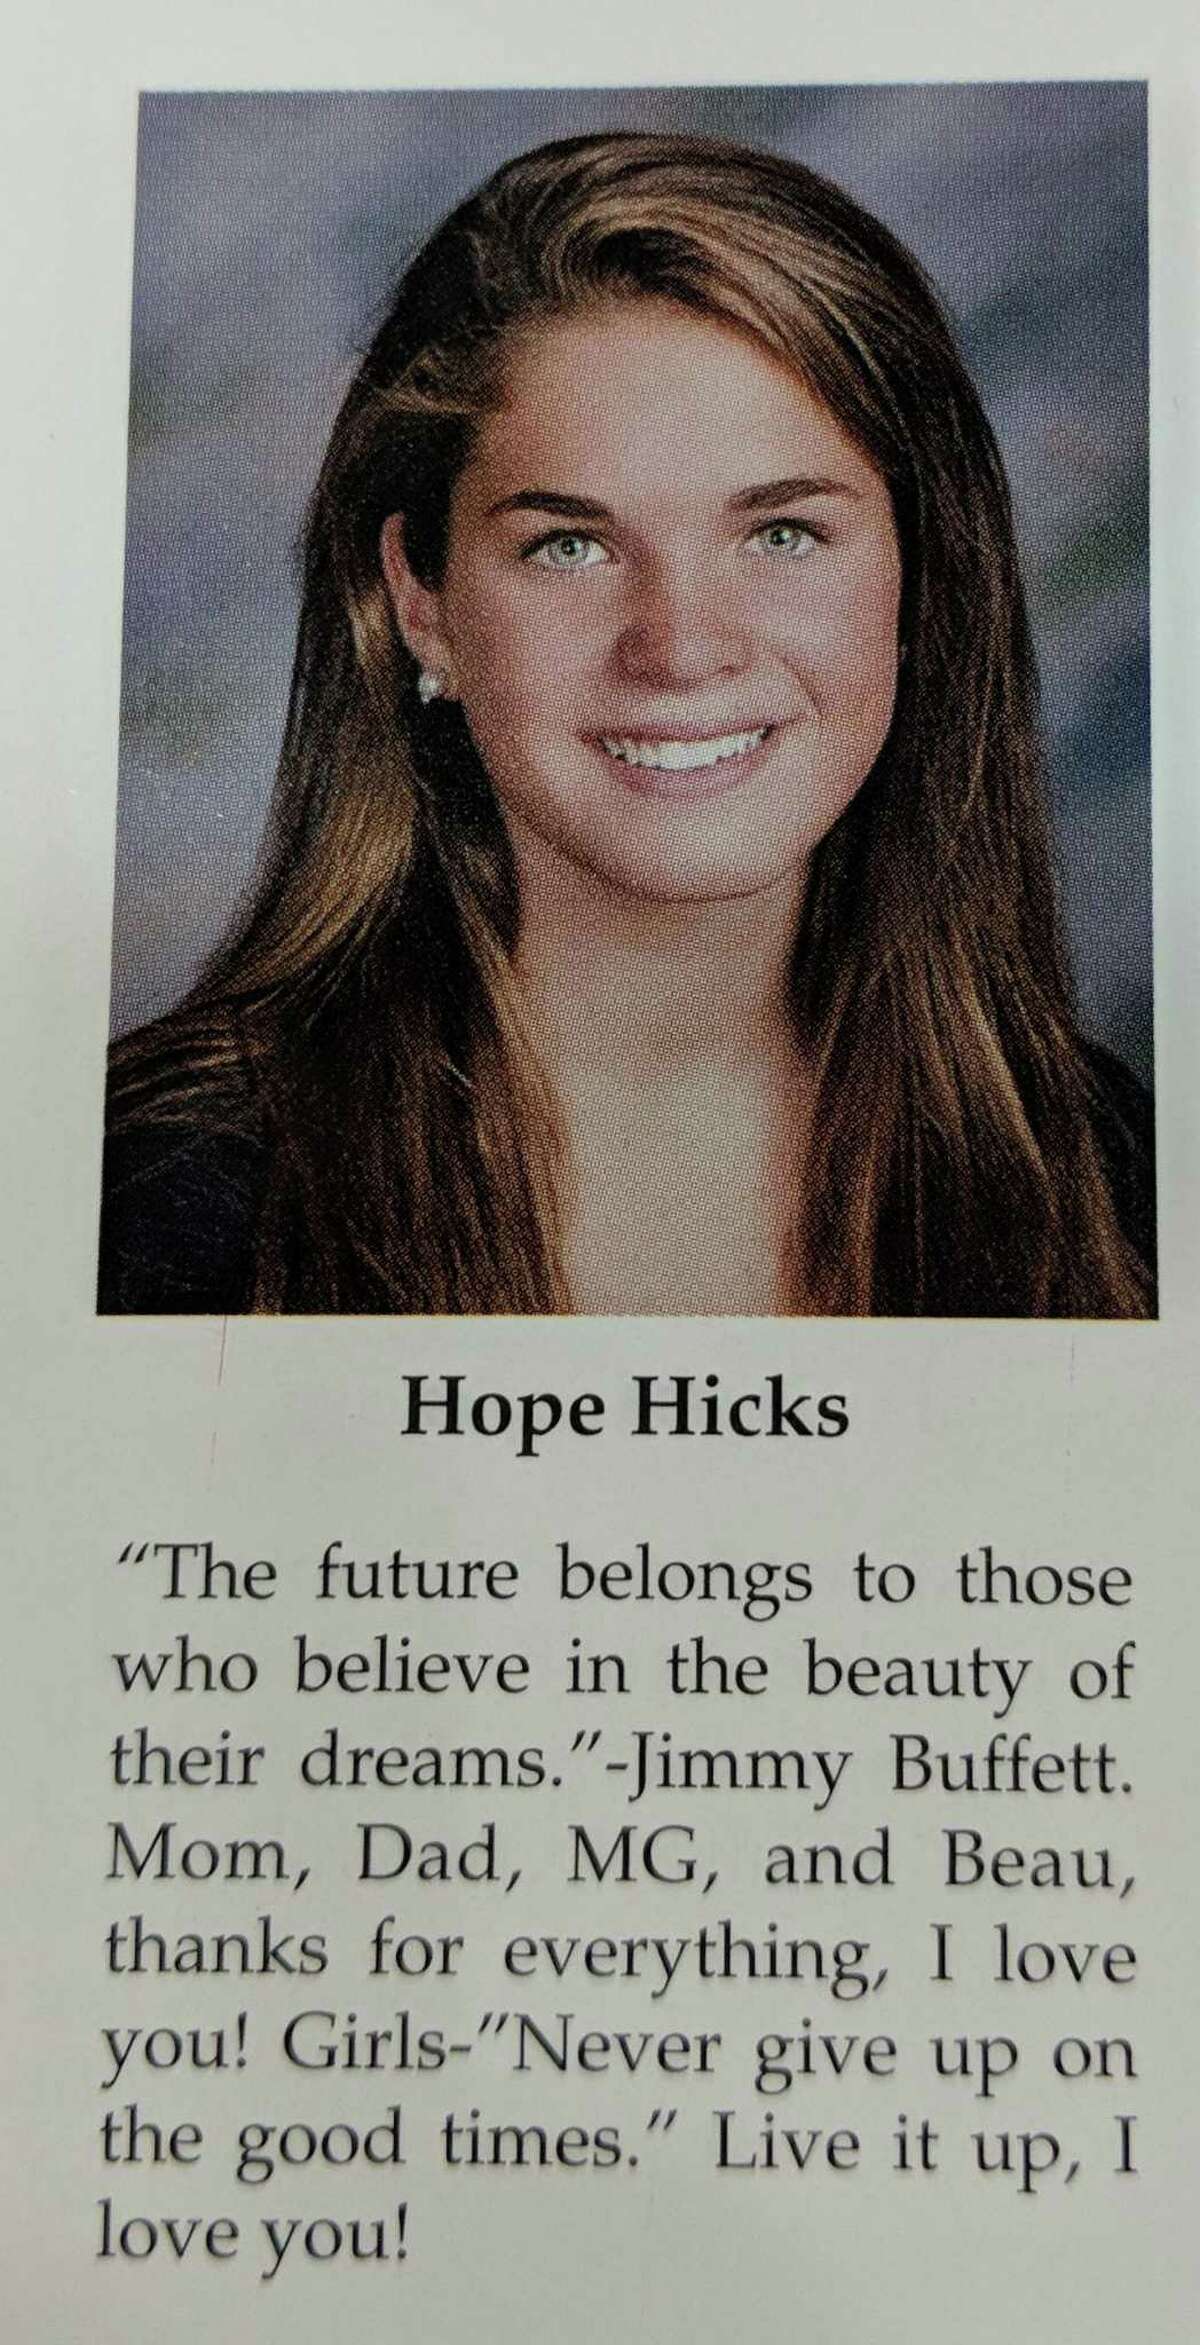 Hope hicks hot pics